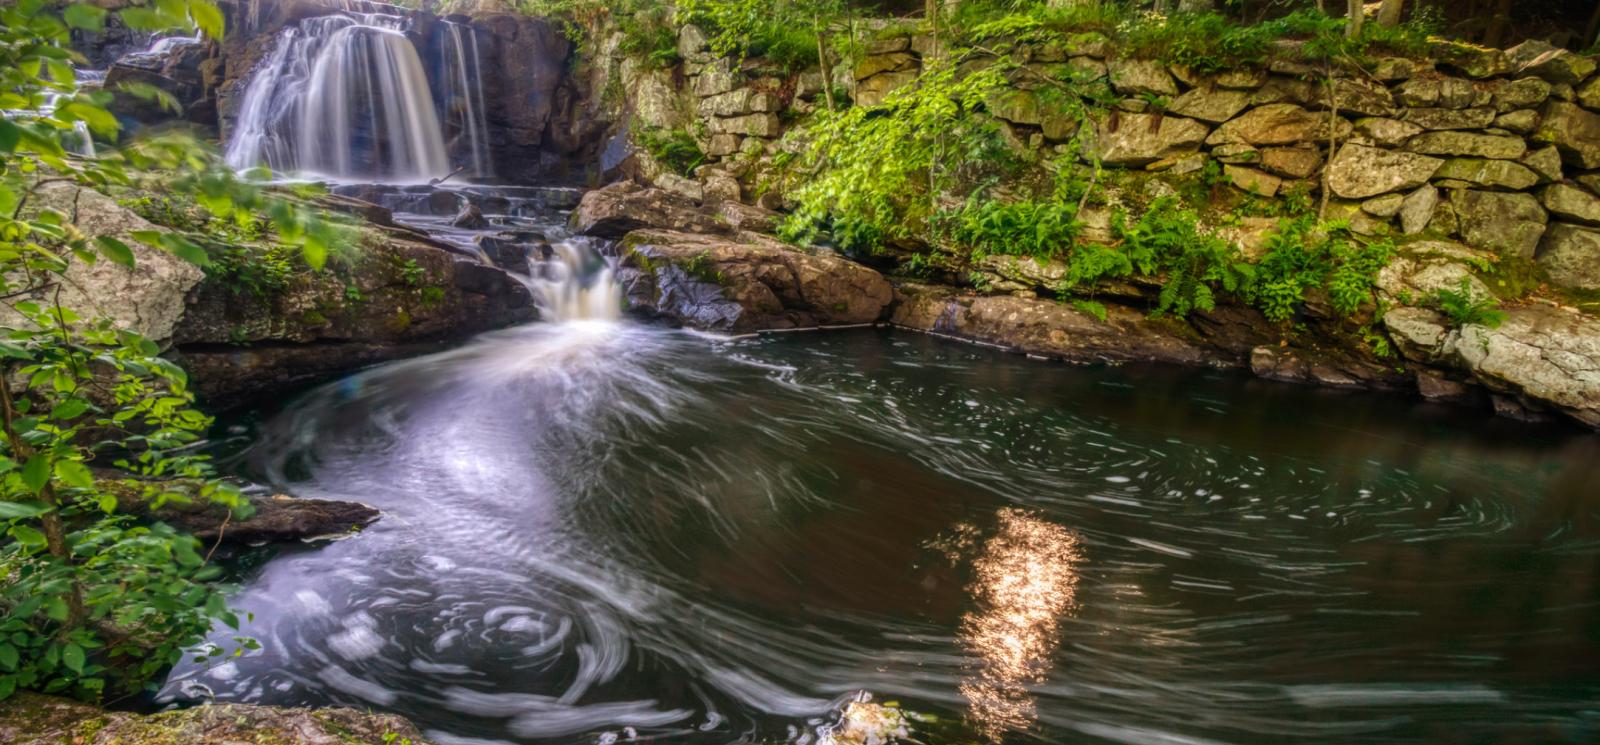 Waterfalls at Southford Falls (Flickr@tquist24)